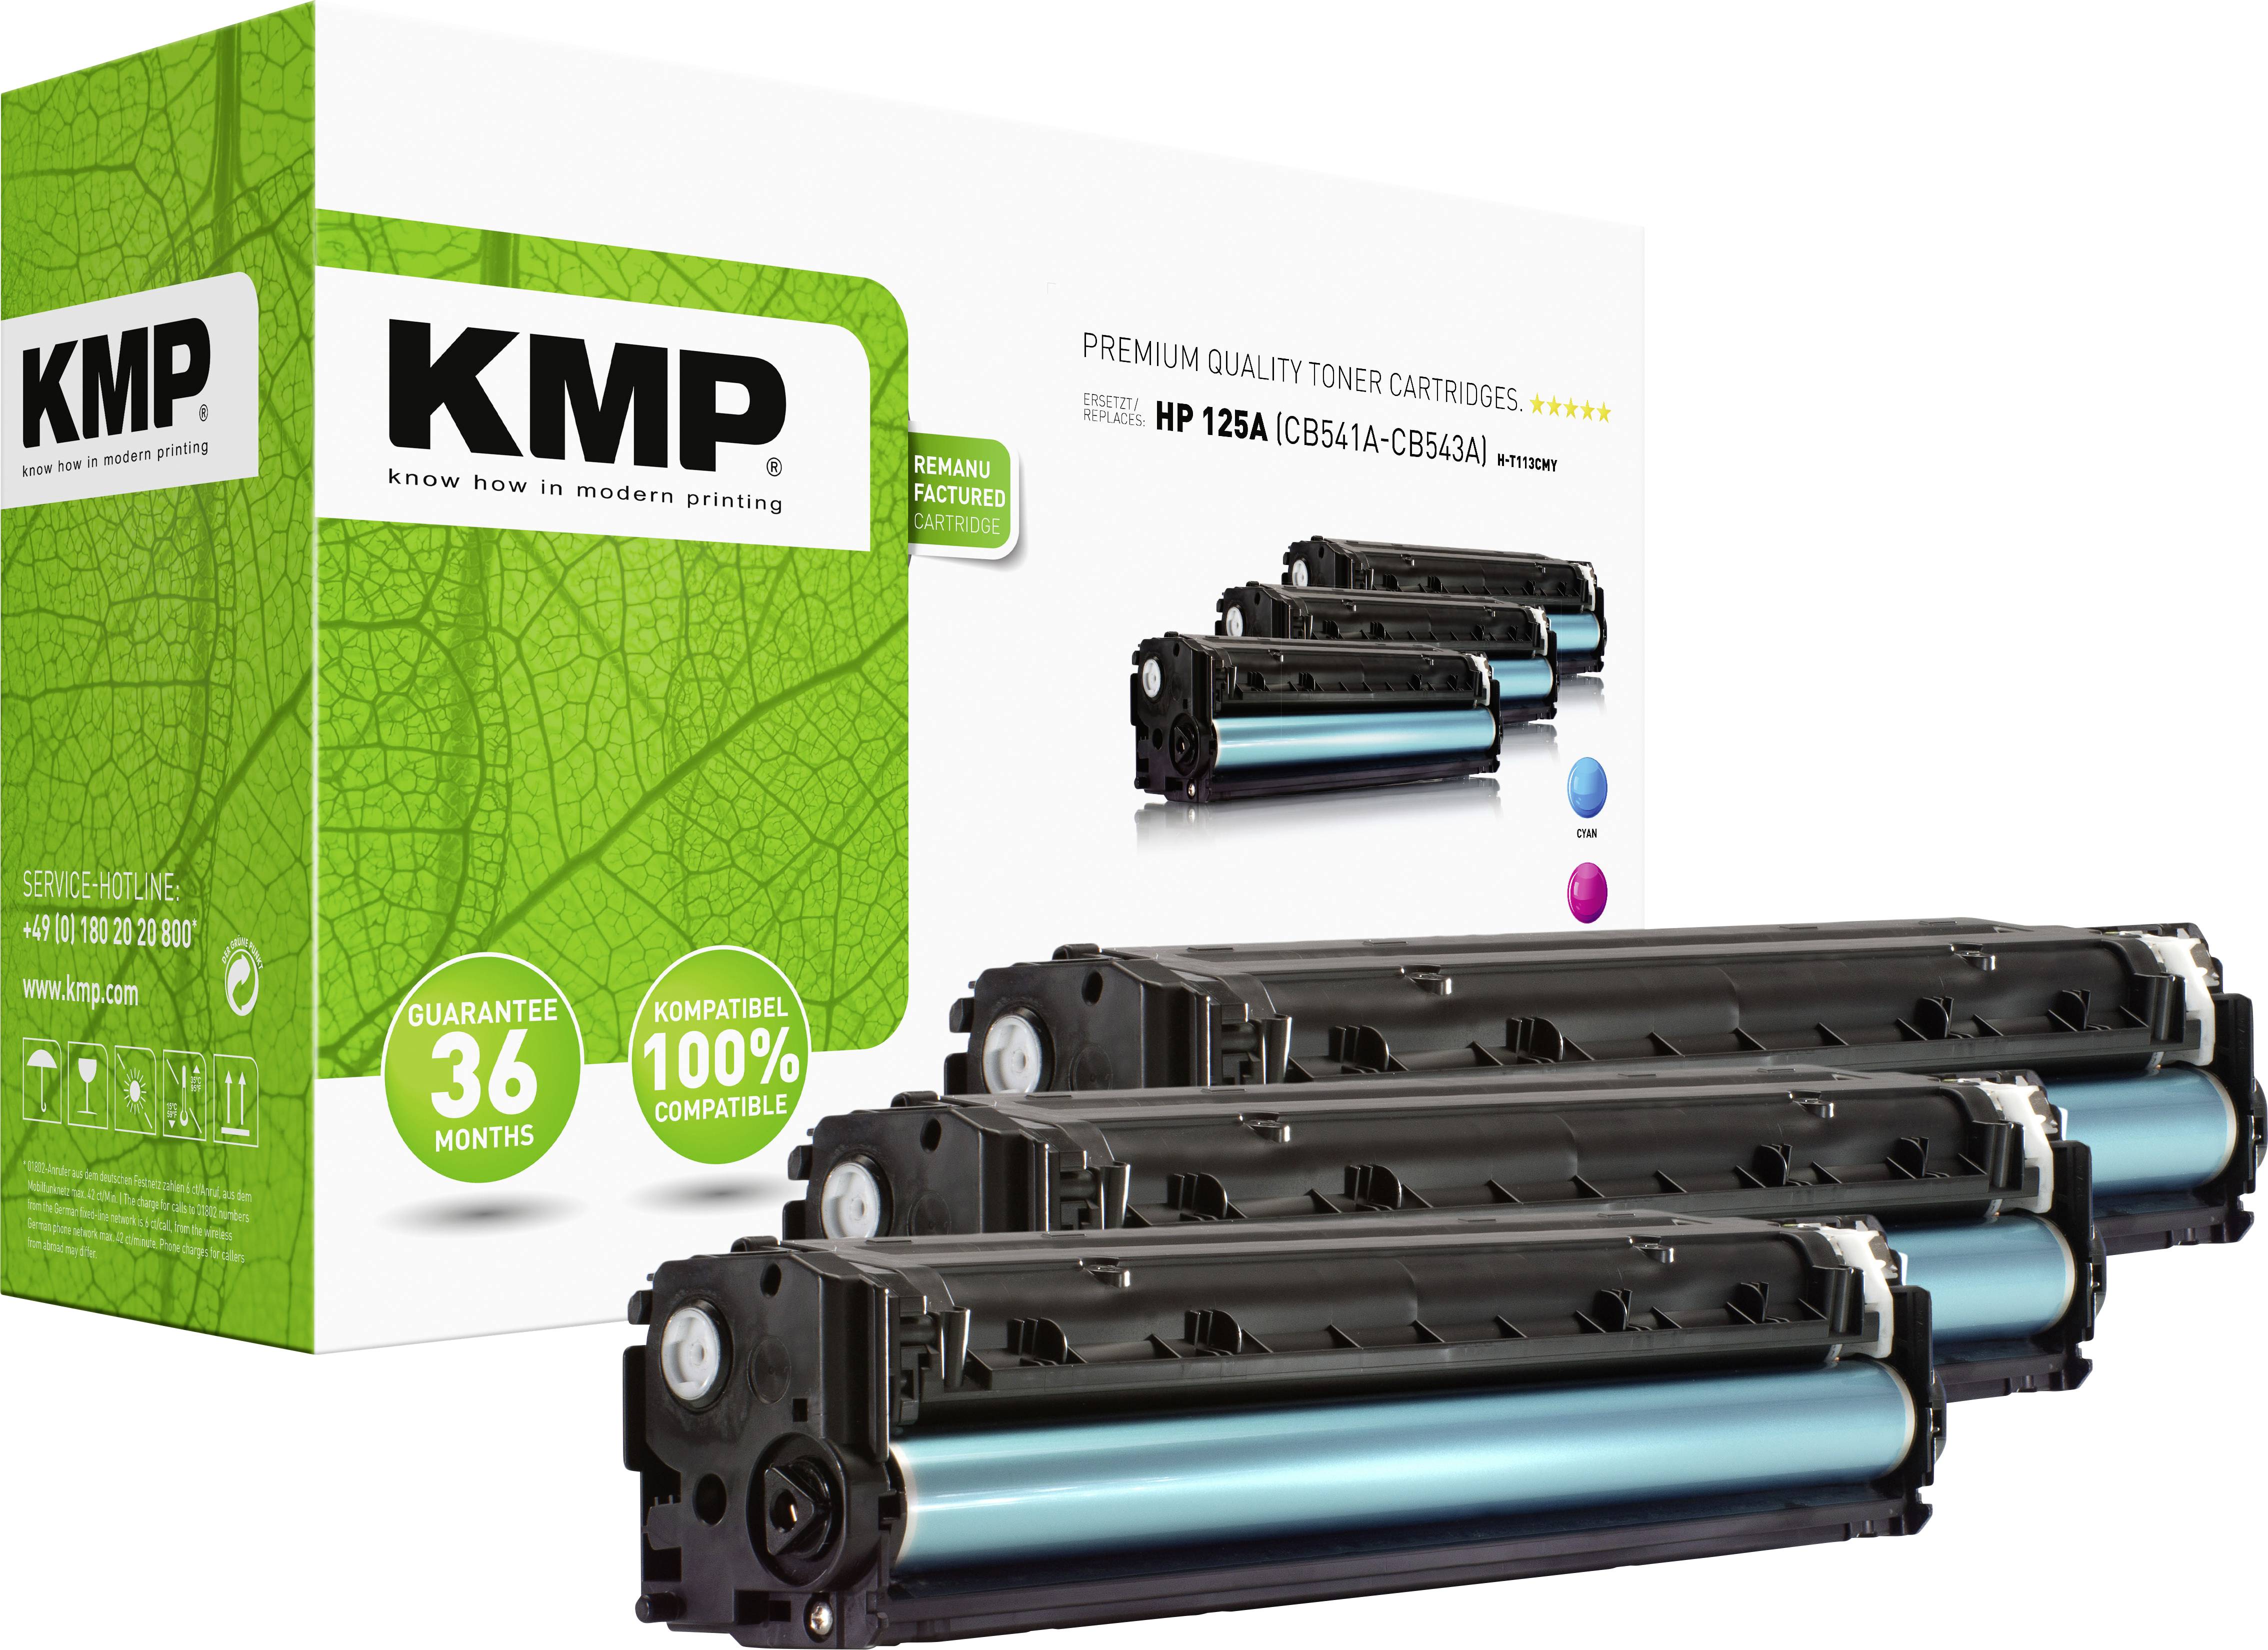 KMP H-T113 CMY Toner cartridge Set replaced HP 125A, CB541A, CB542A, CB543A  Cyan, Magenta, Yellow 1400 Sides Compatible